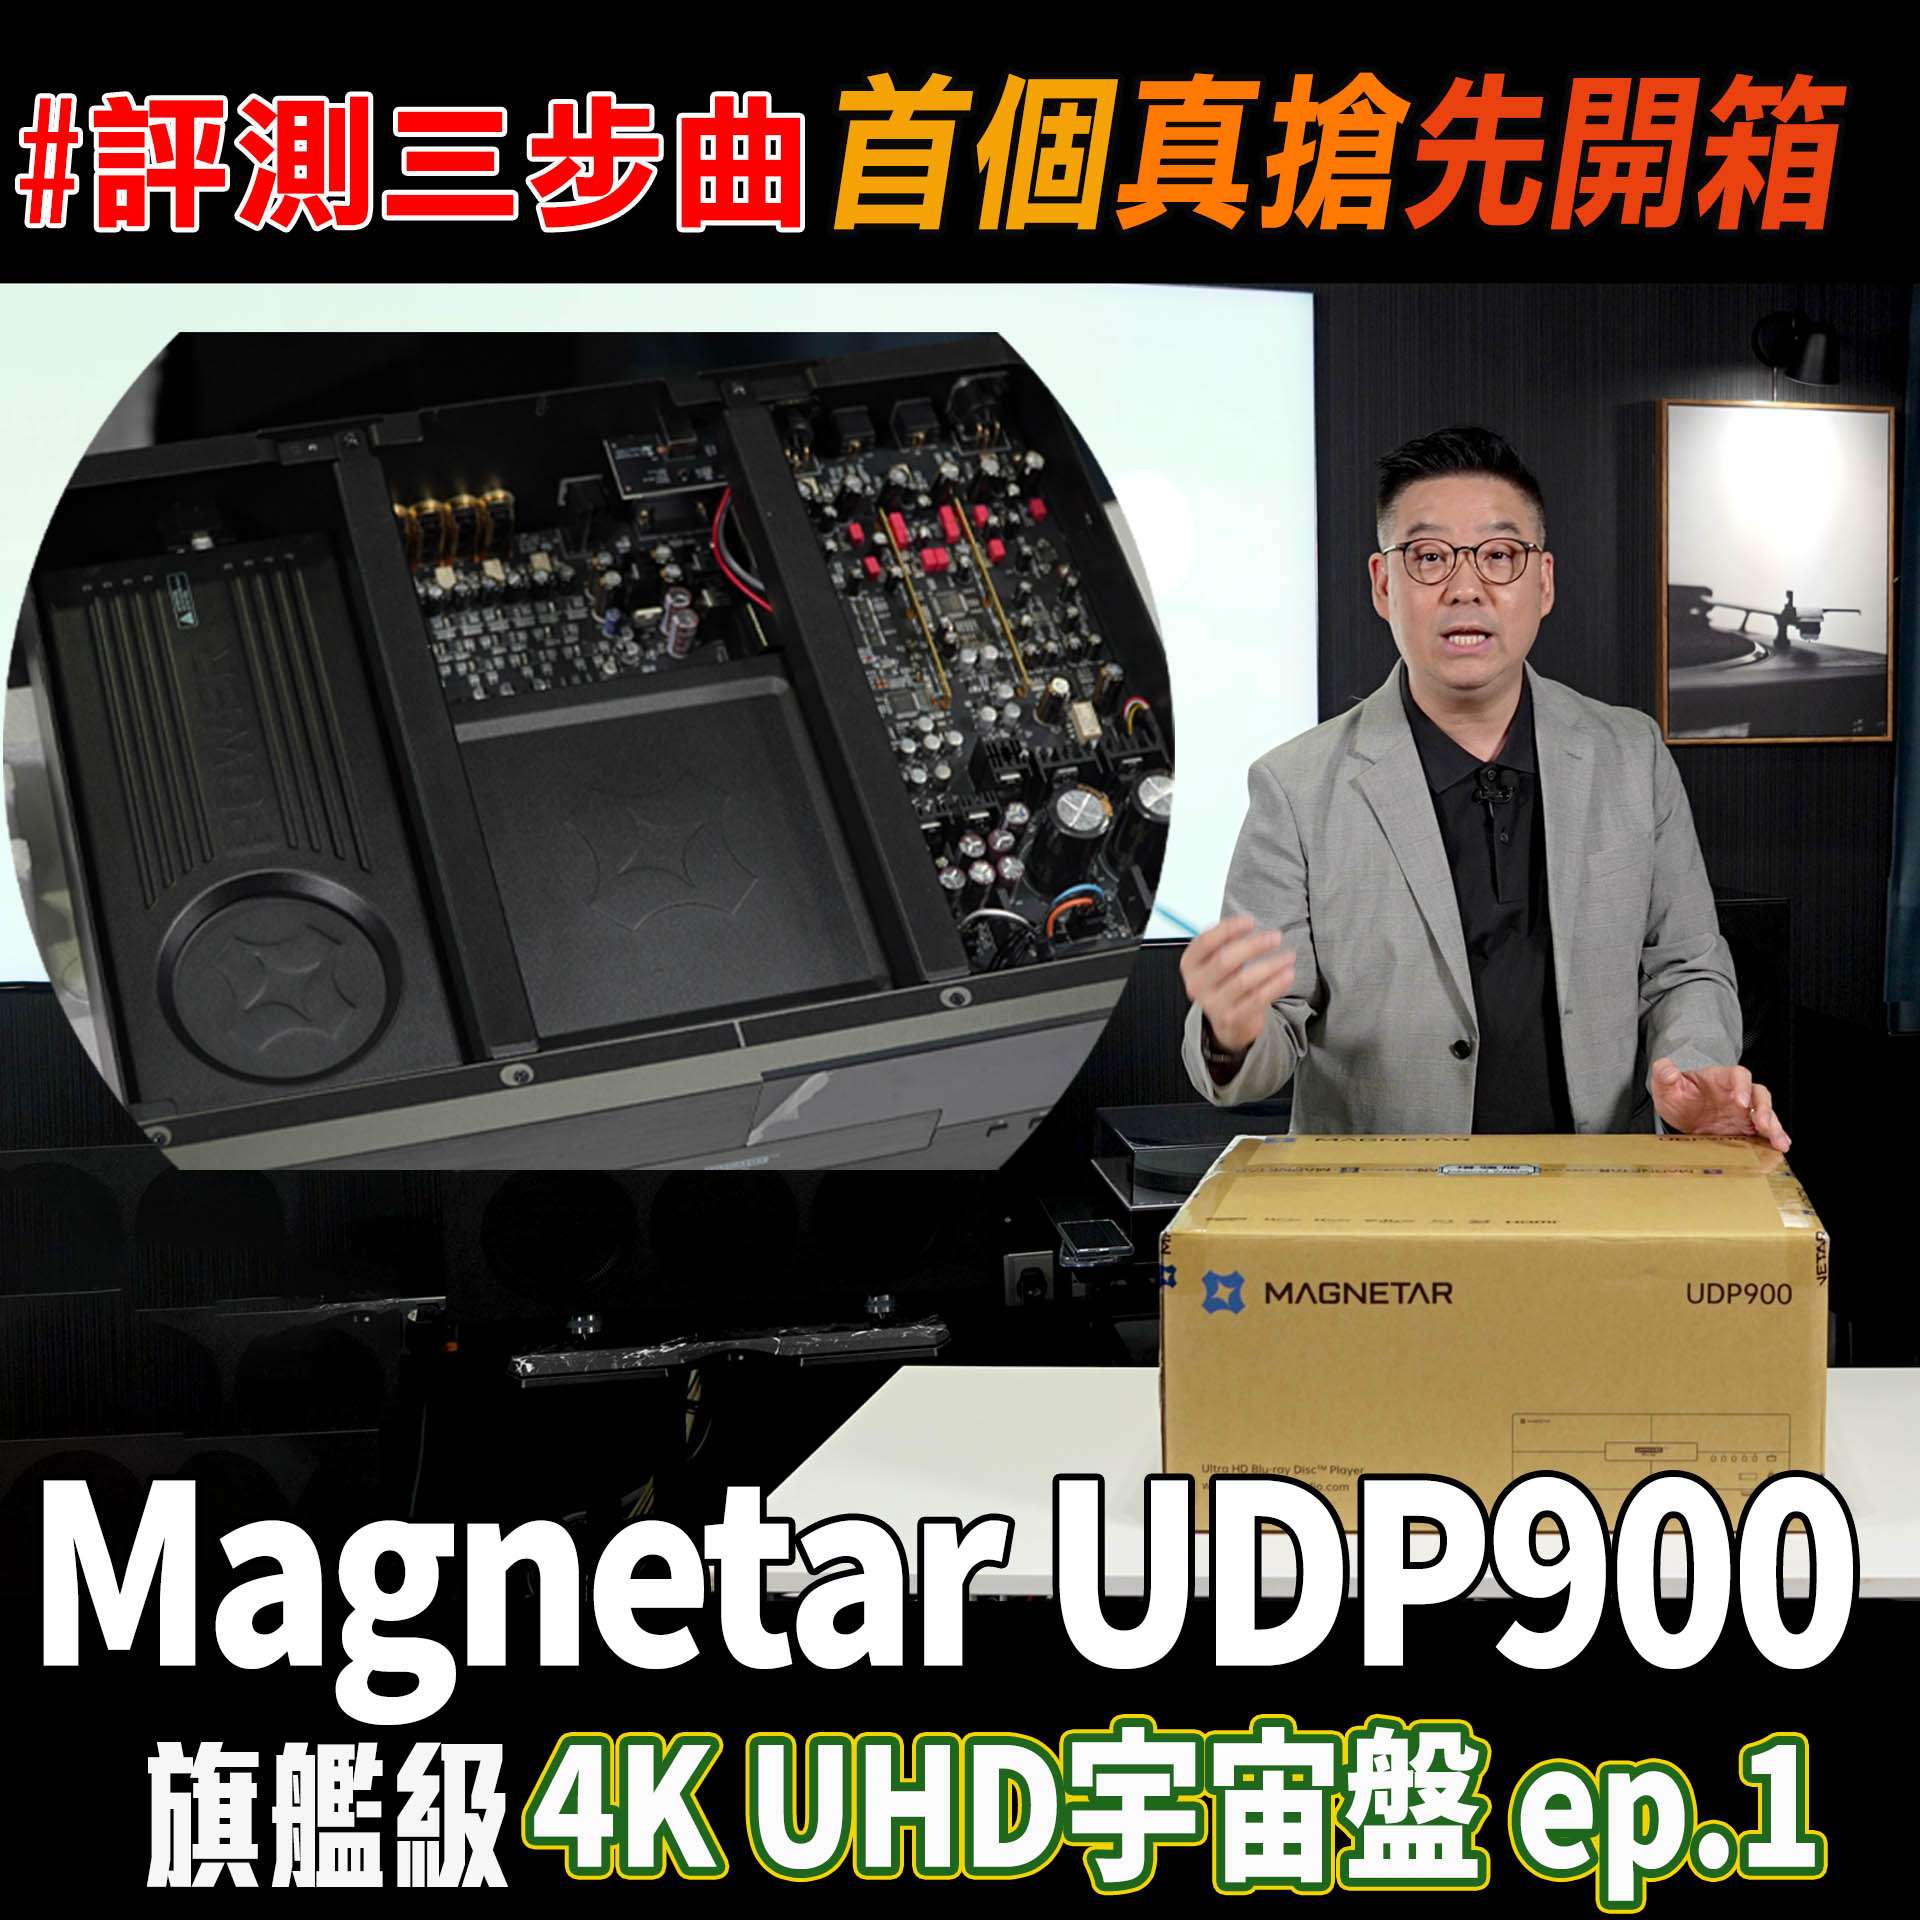 Magnetar UDP900 unbox IG ep1 copy.jpg